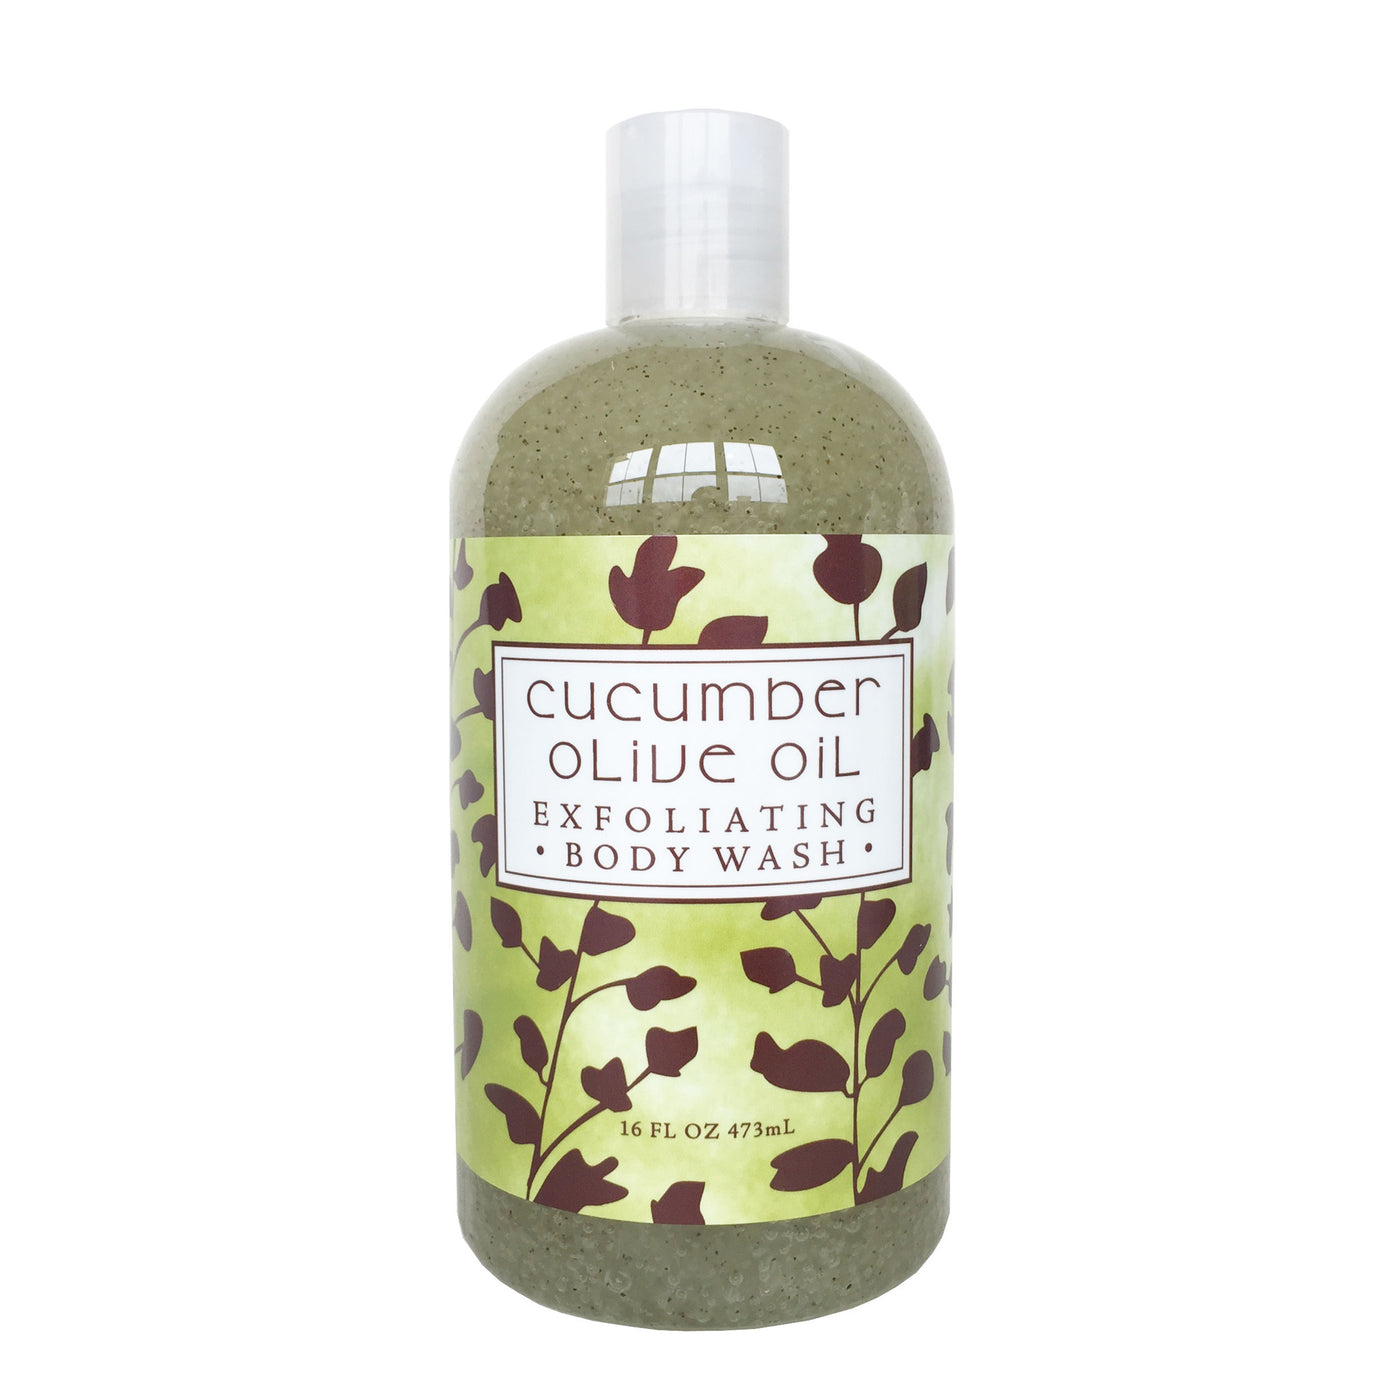 Cucumber Olive Oil Exfoliating Body Wash